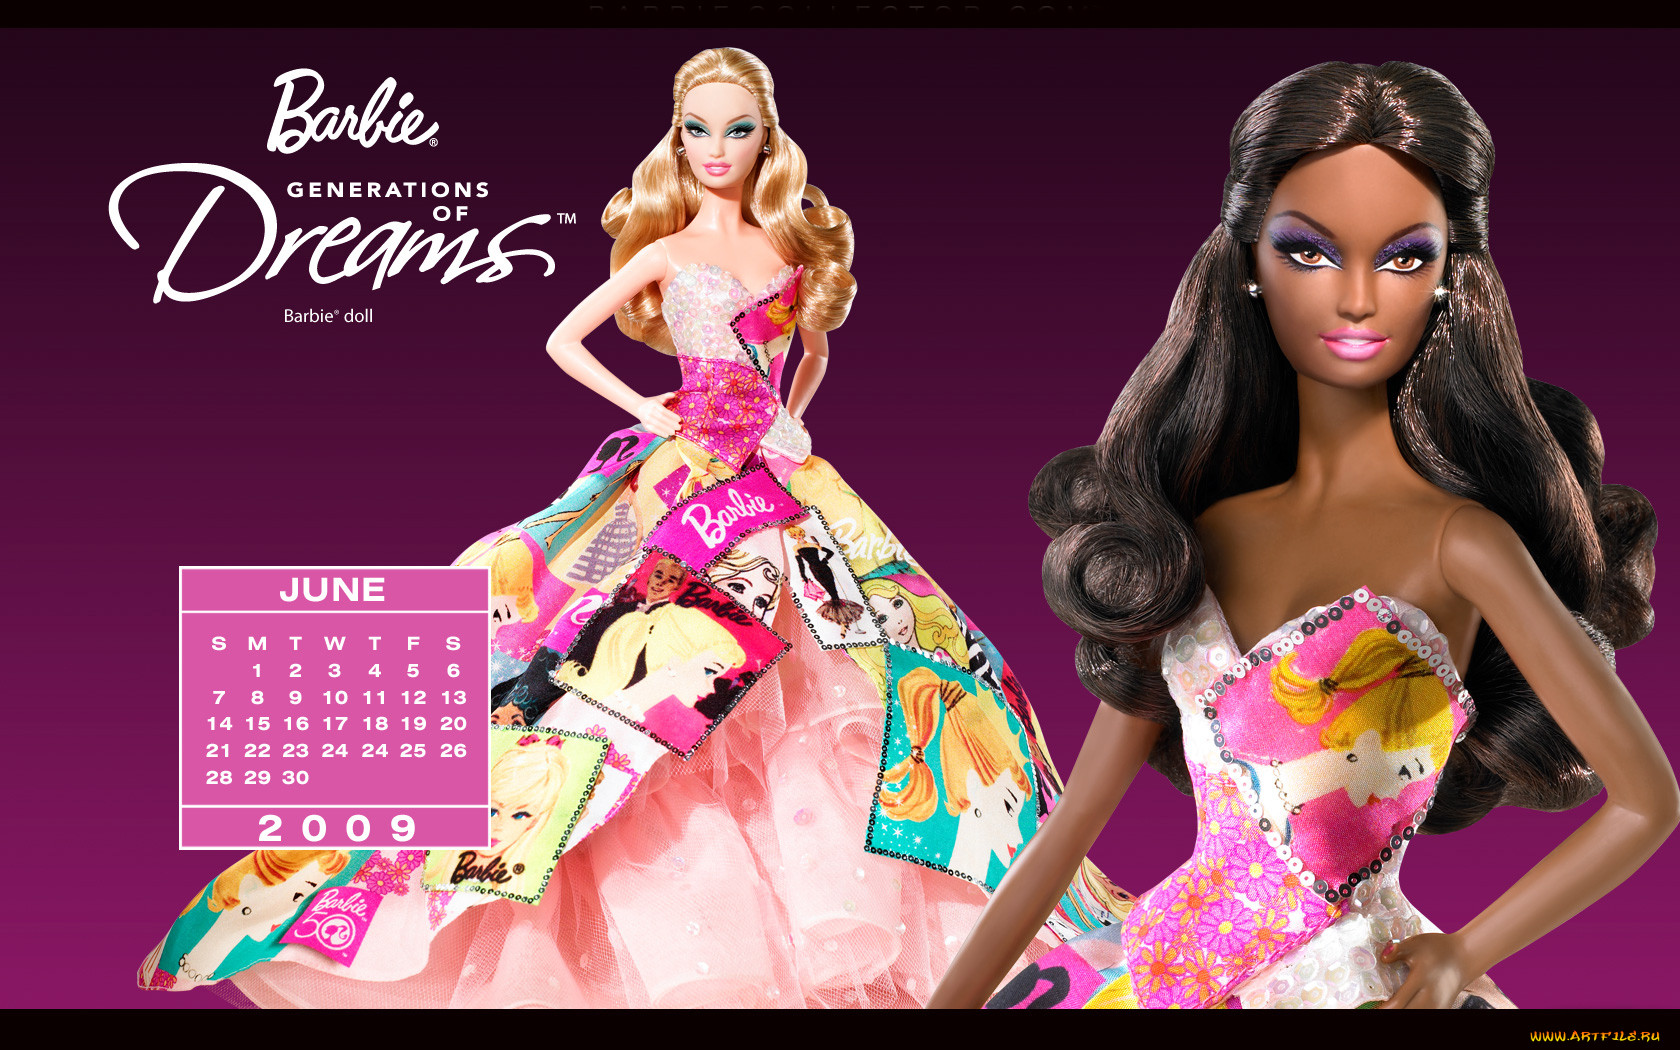 Barbiegirl. Барби фото. Барби (кукла) фото. Кукла Барби 2012 года. Барби обои.